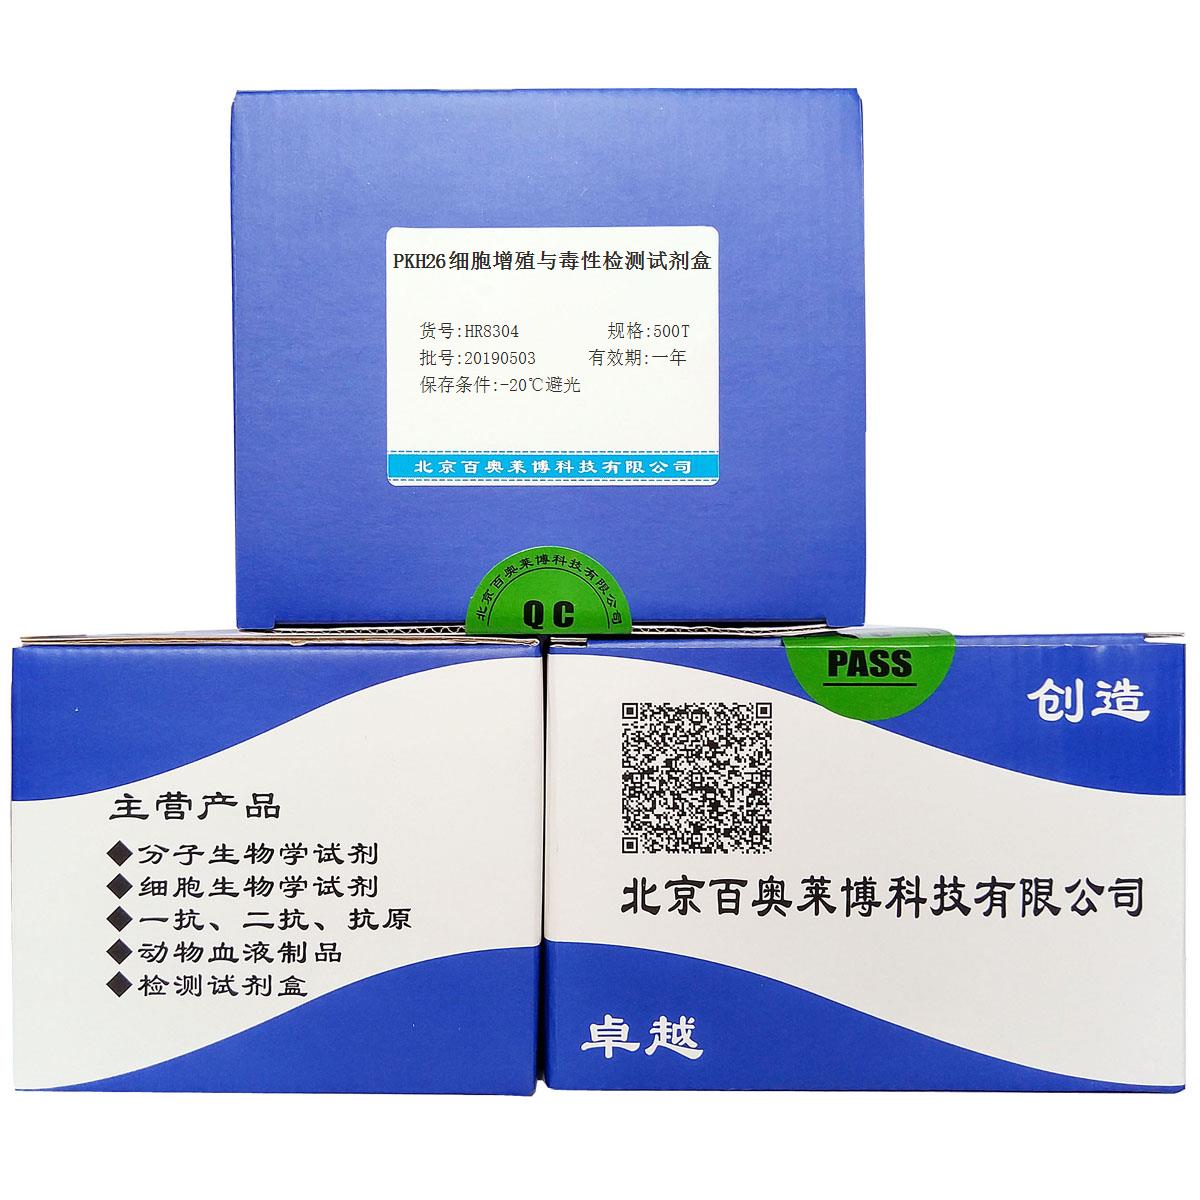 PKH26细胞增殖与毒性检测试剂盒北京厂家